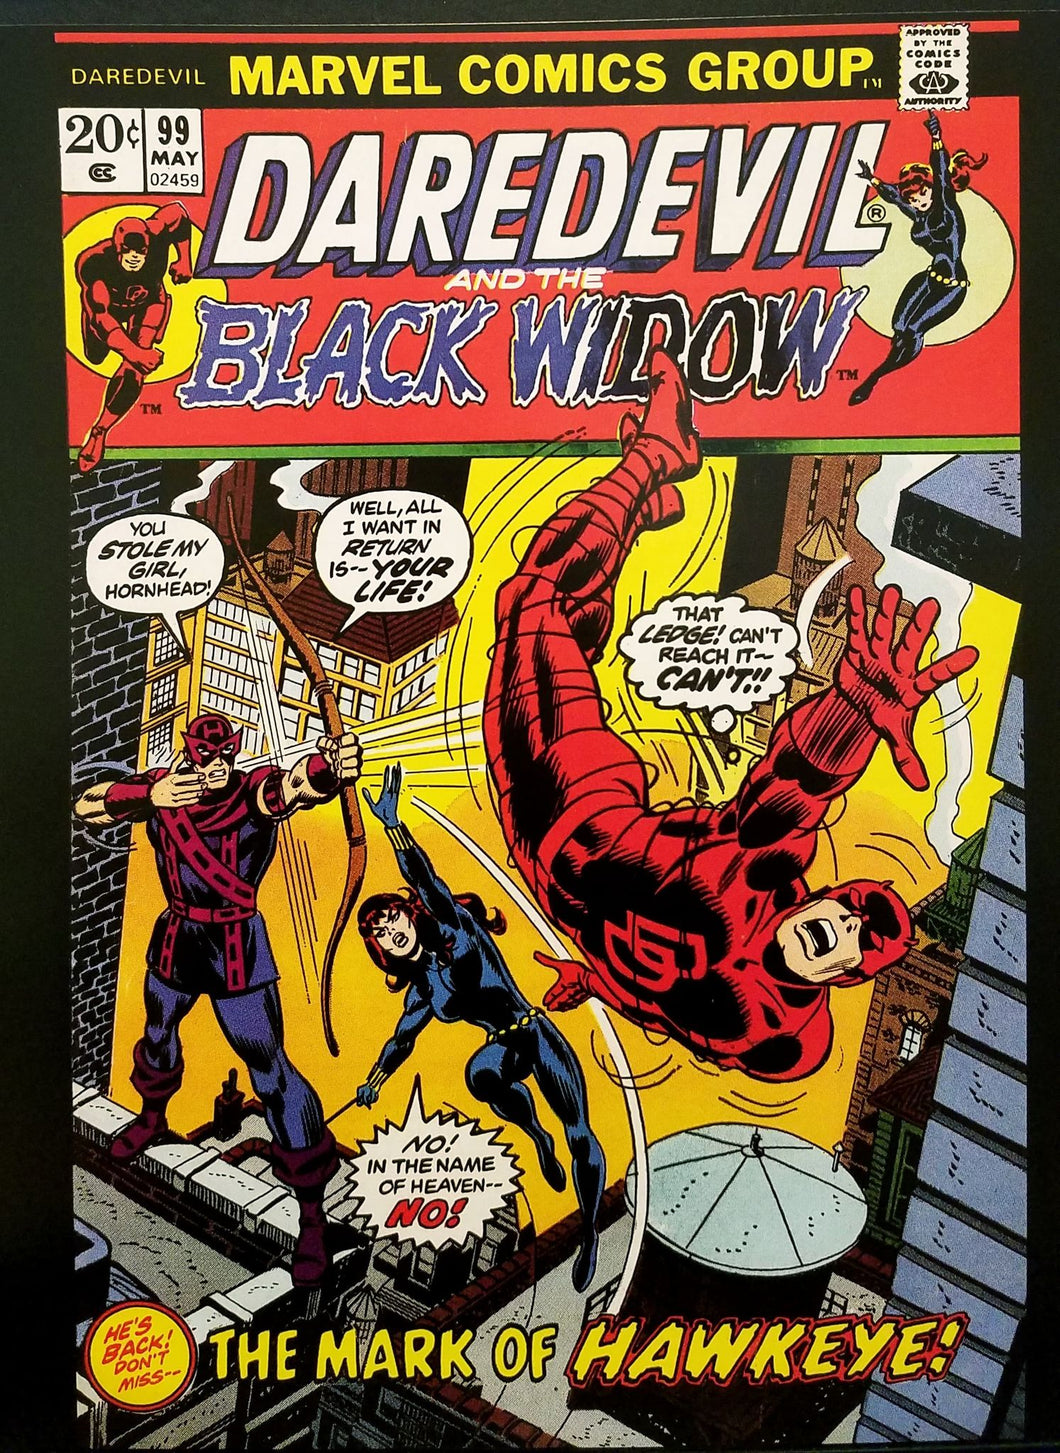 Daredevil #99 w/ Black Widow by 11x14 FRAMED Art Print, Vintage Marvel Comics